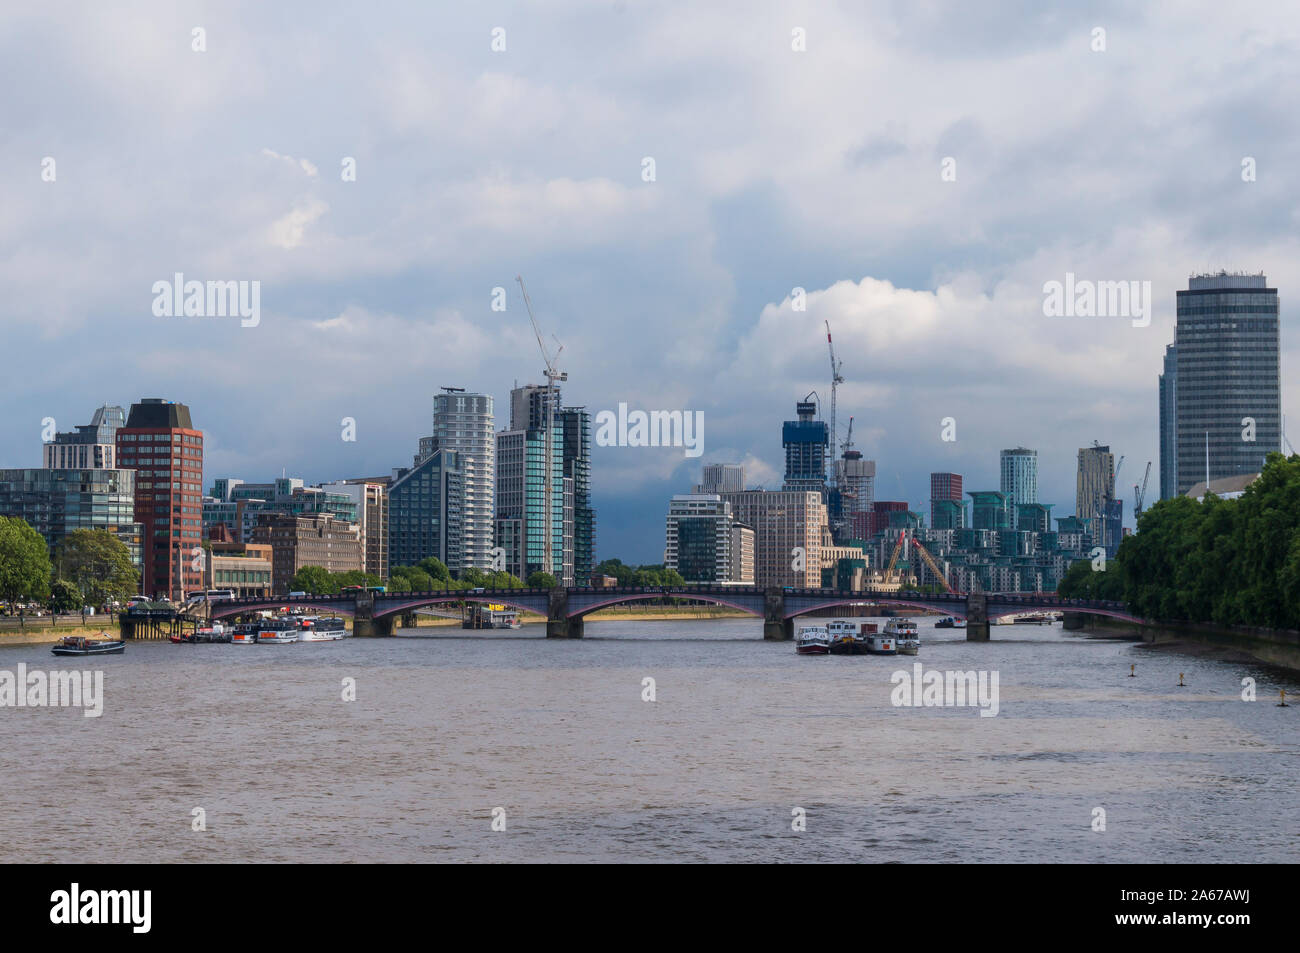 Bridges On The Thames, London, England Stock Photo - Alamy